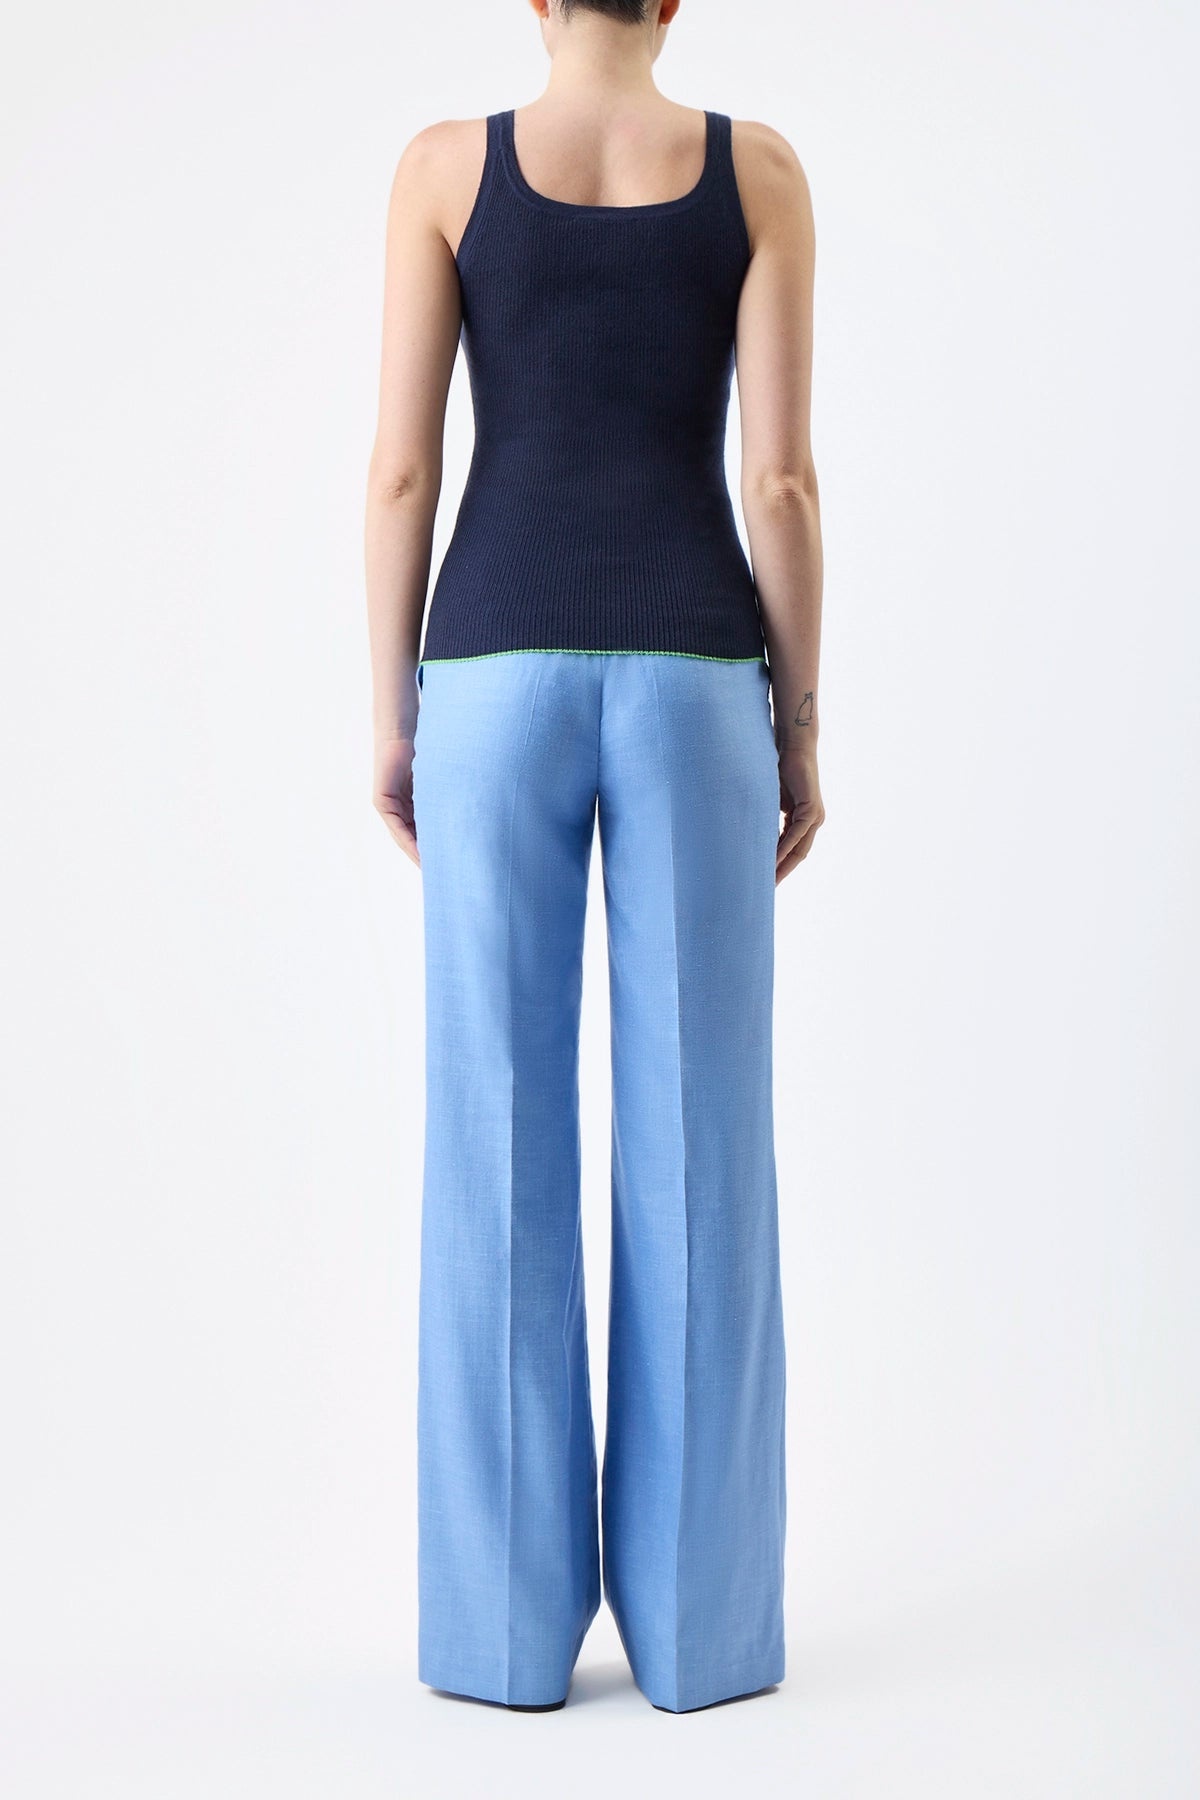 Vesta Pant in Light Blue Silk Wool with Linen - 5